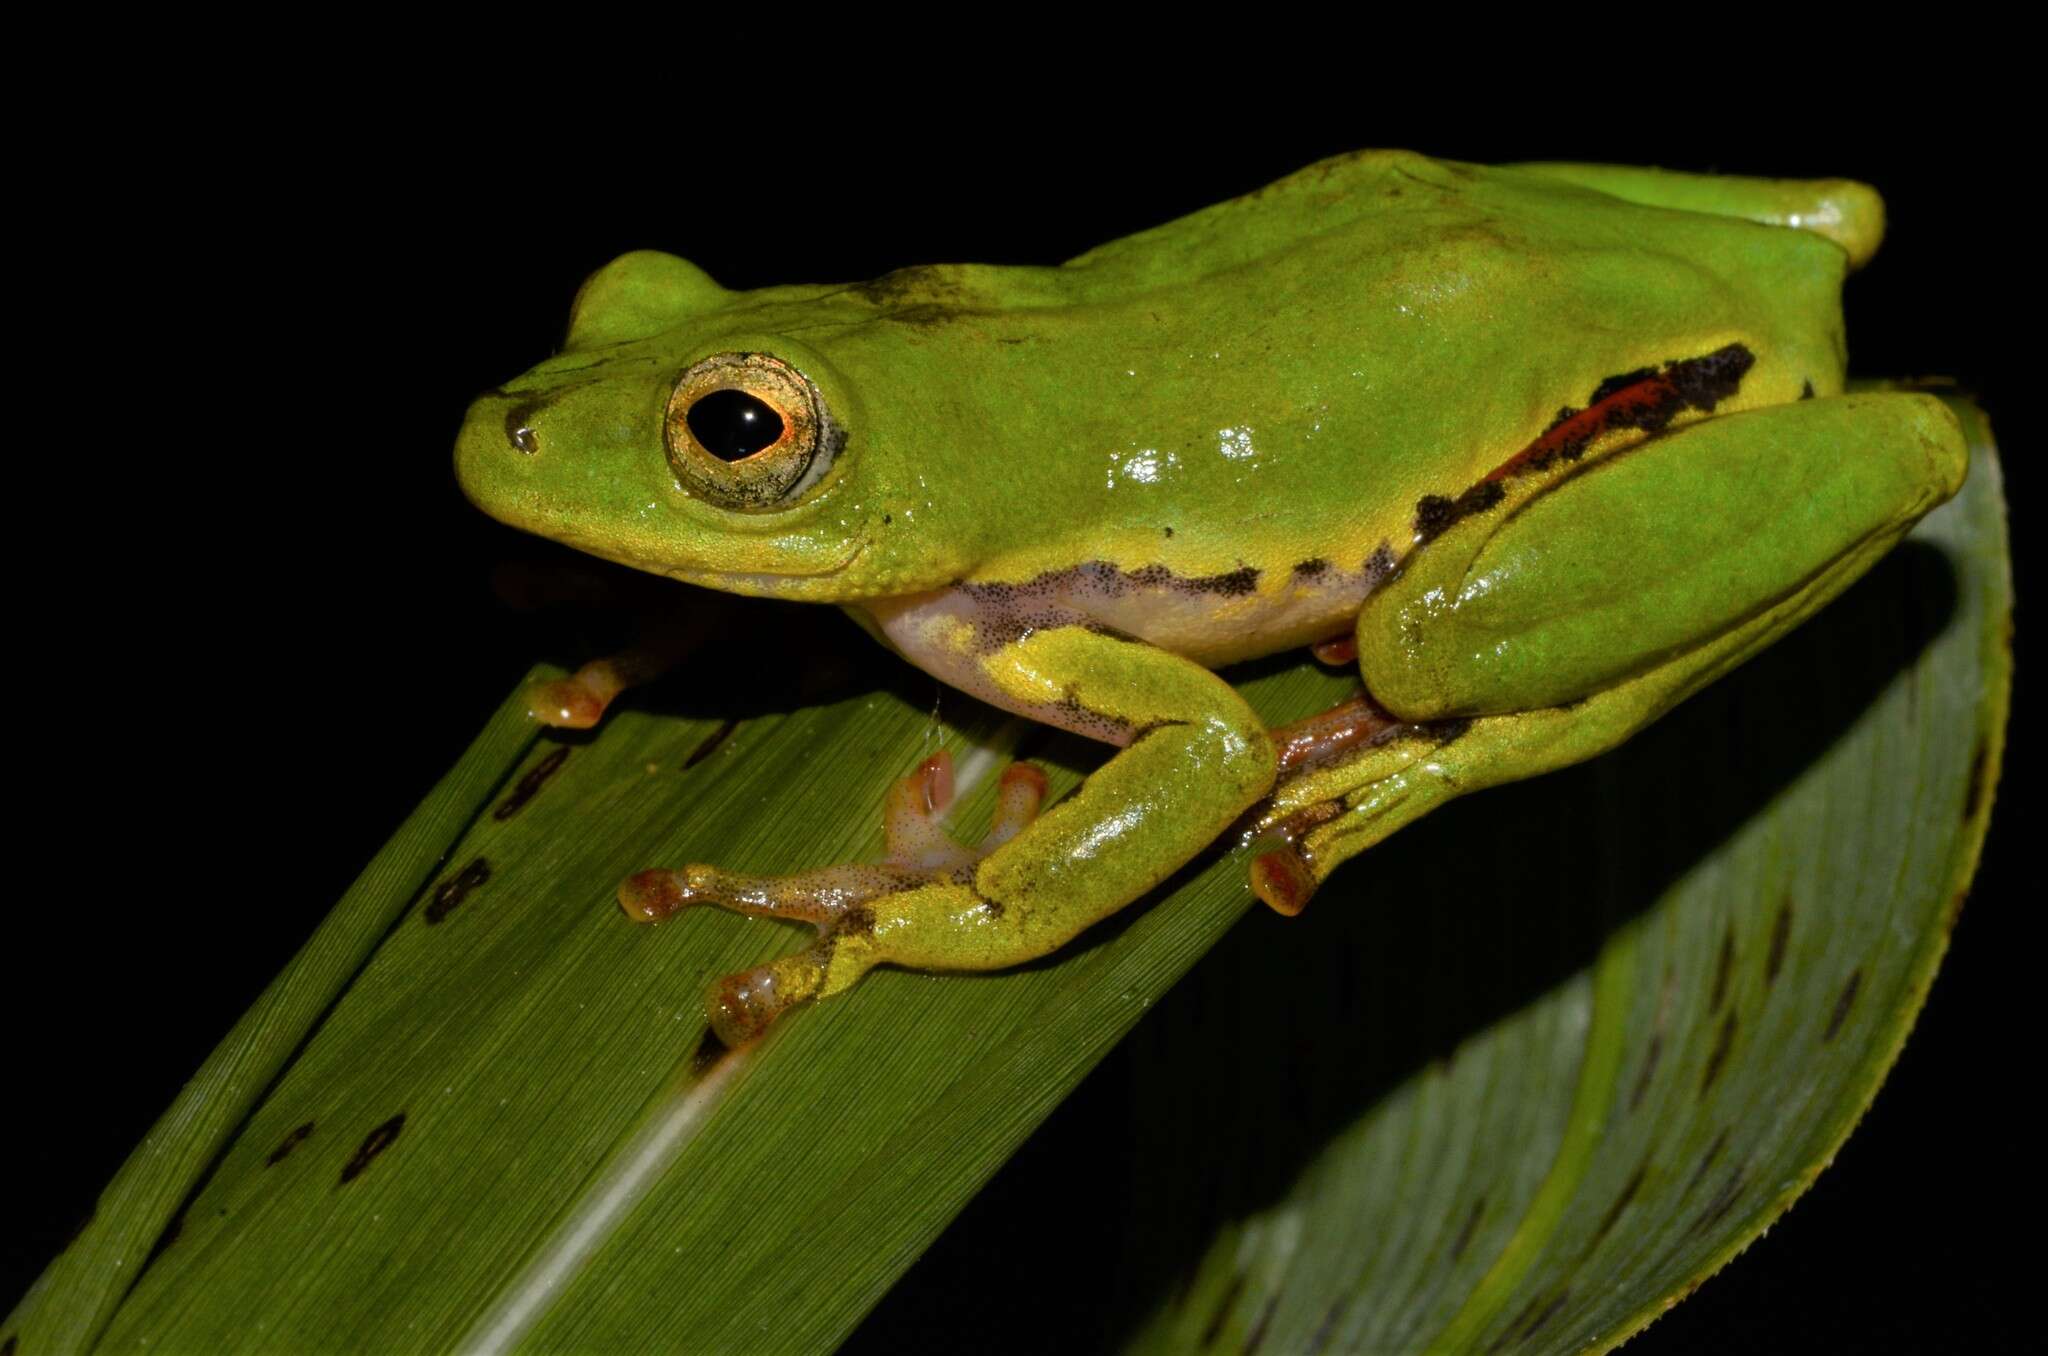 Image of Olive Reed Frog